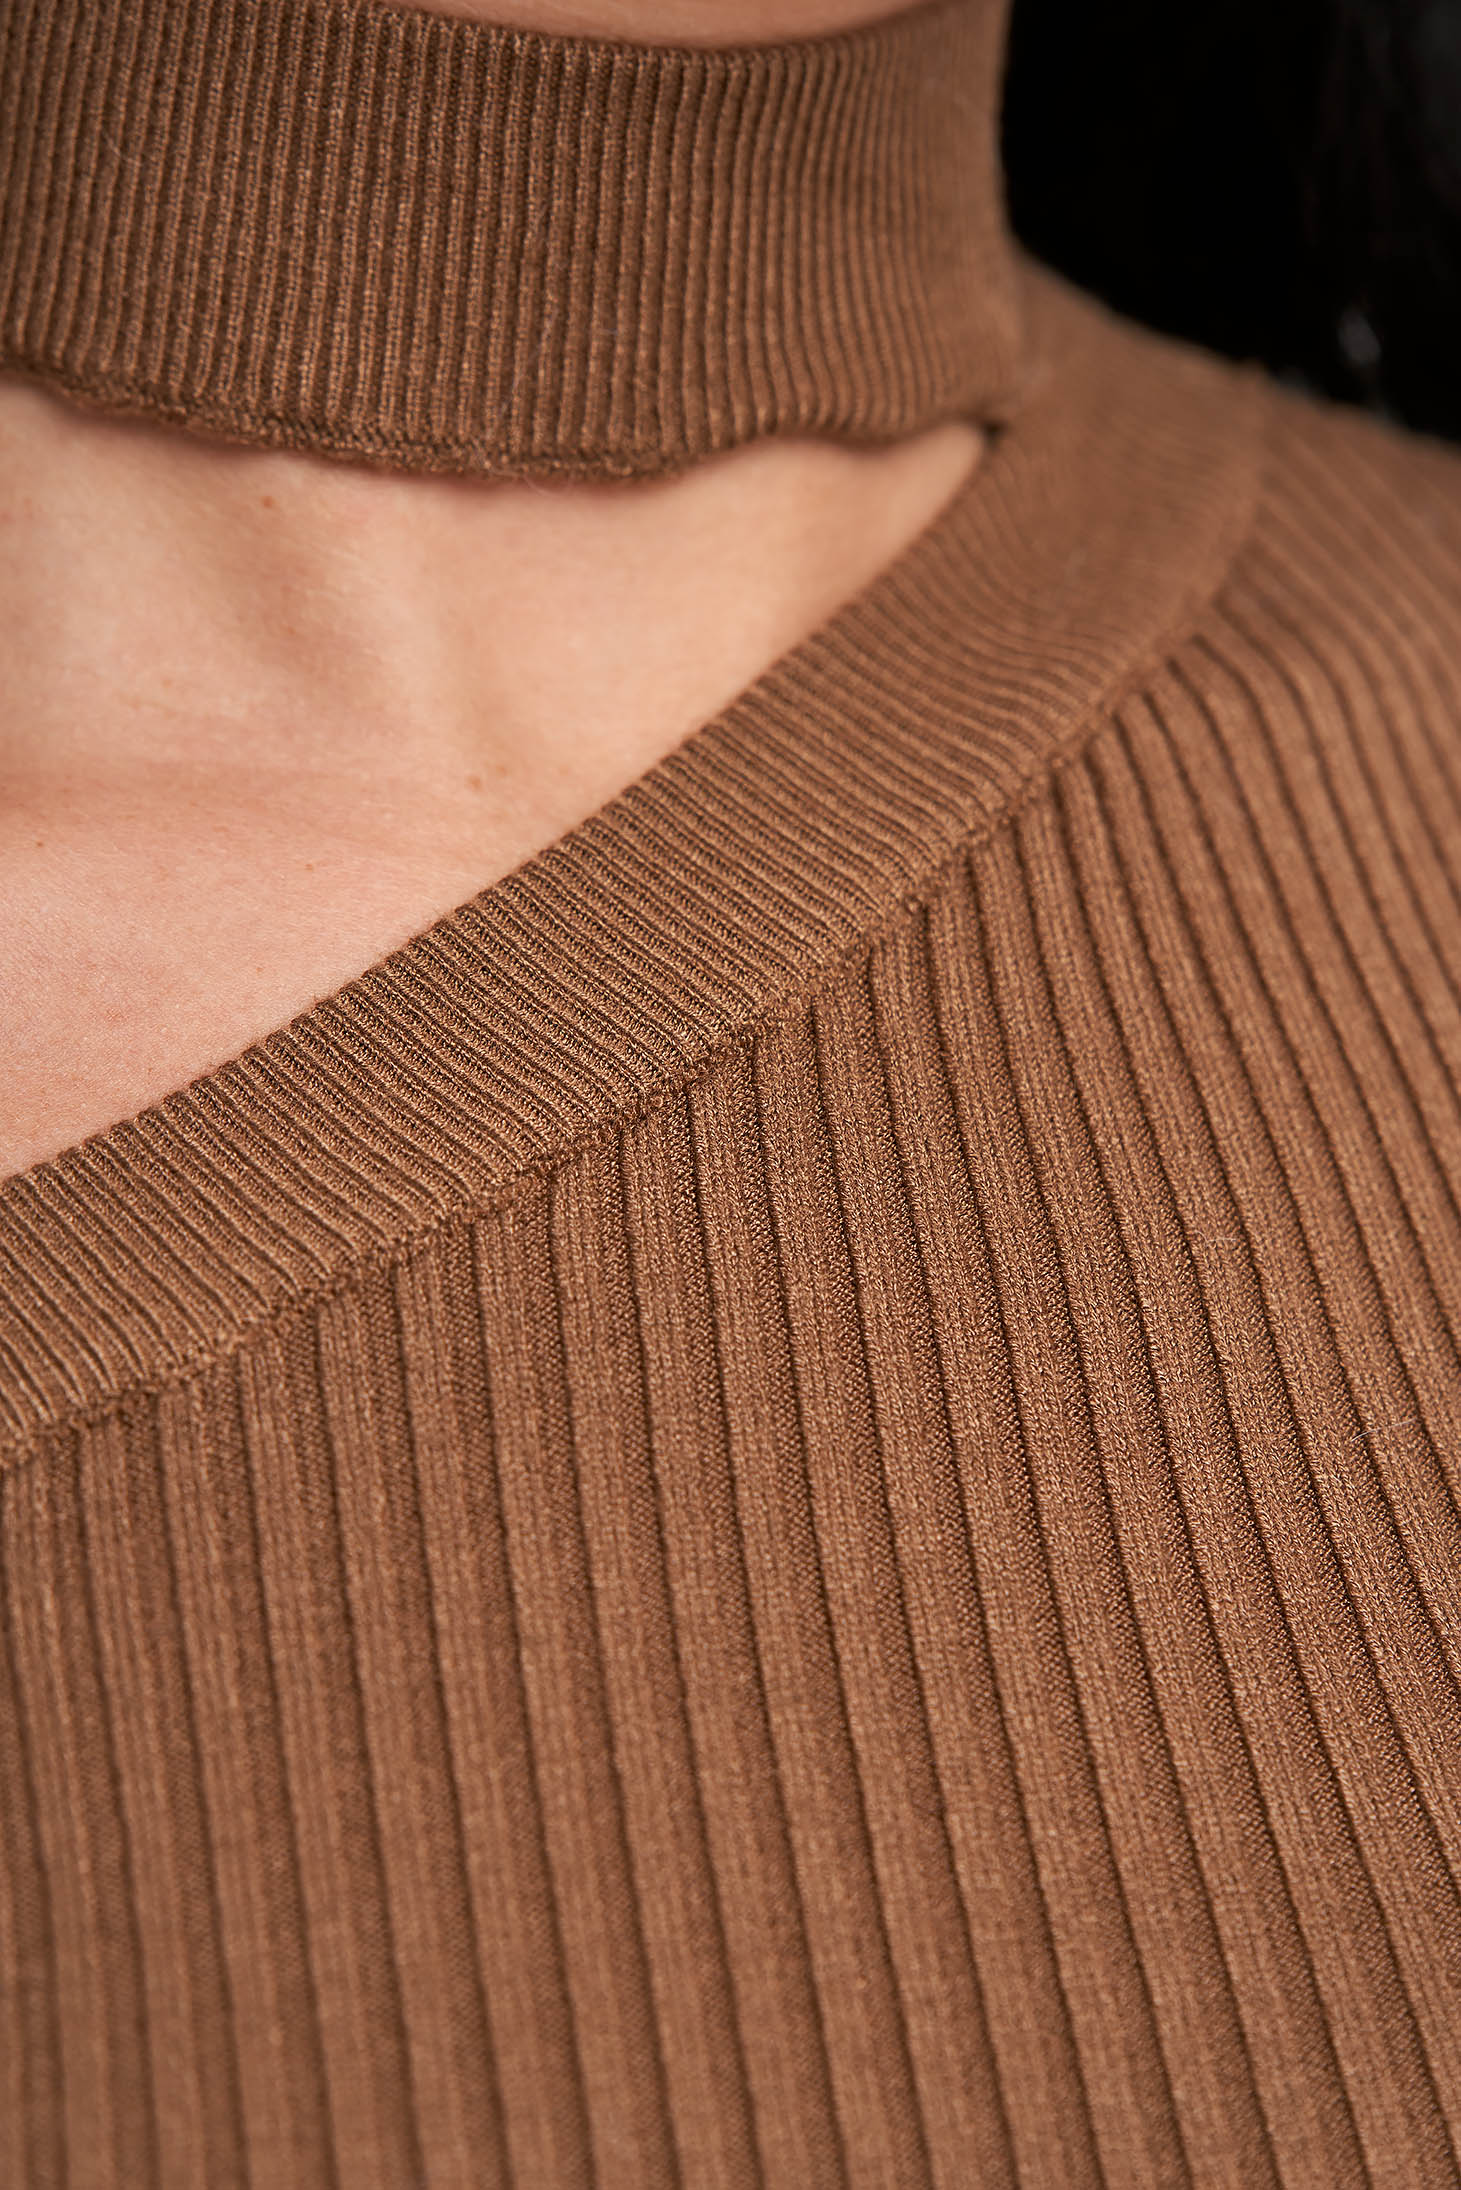 Rochie din tricot reiat maro scurta tip creion cu decupaje in material - SunShine 6 - StarShinerS.ro